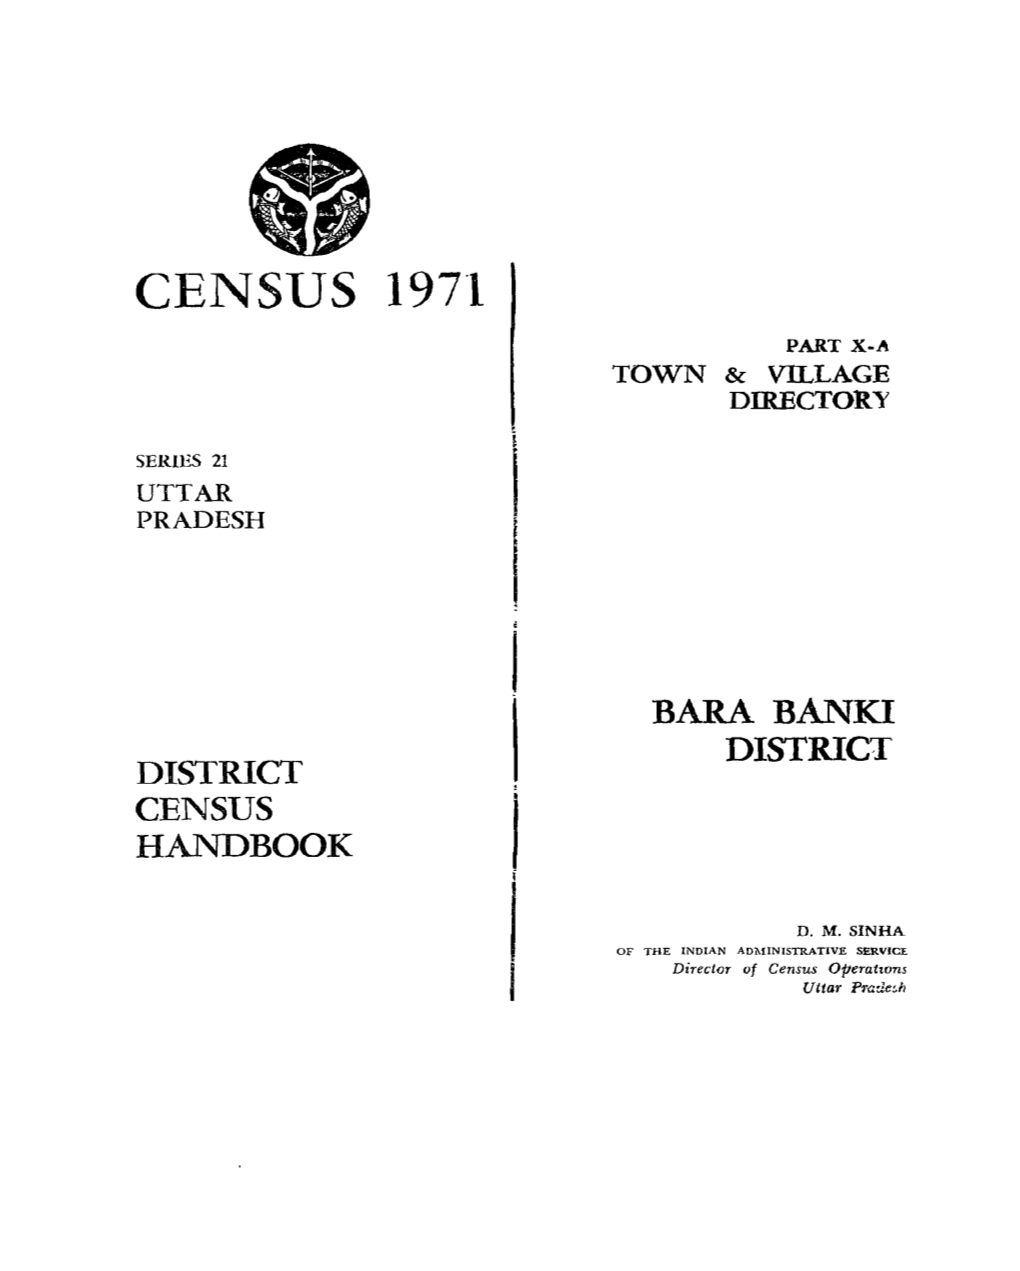 District Census Handbook, Bara Banki, Part X-A, Series-21, Uttar Pradesh